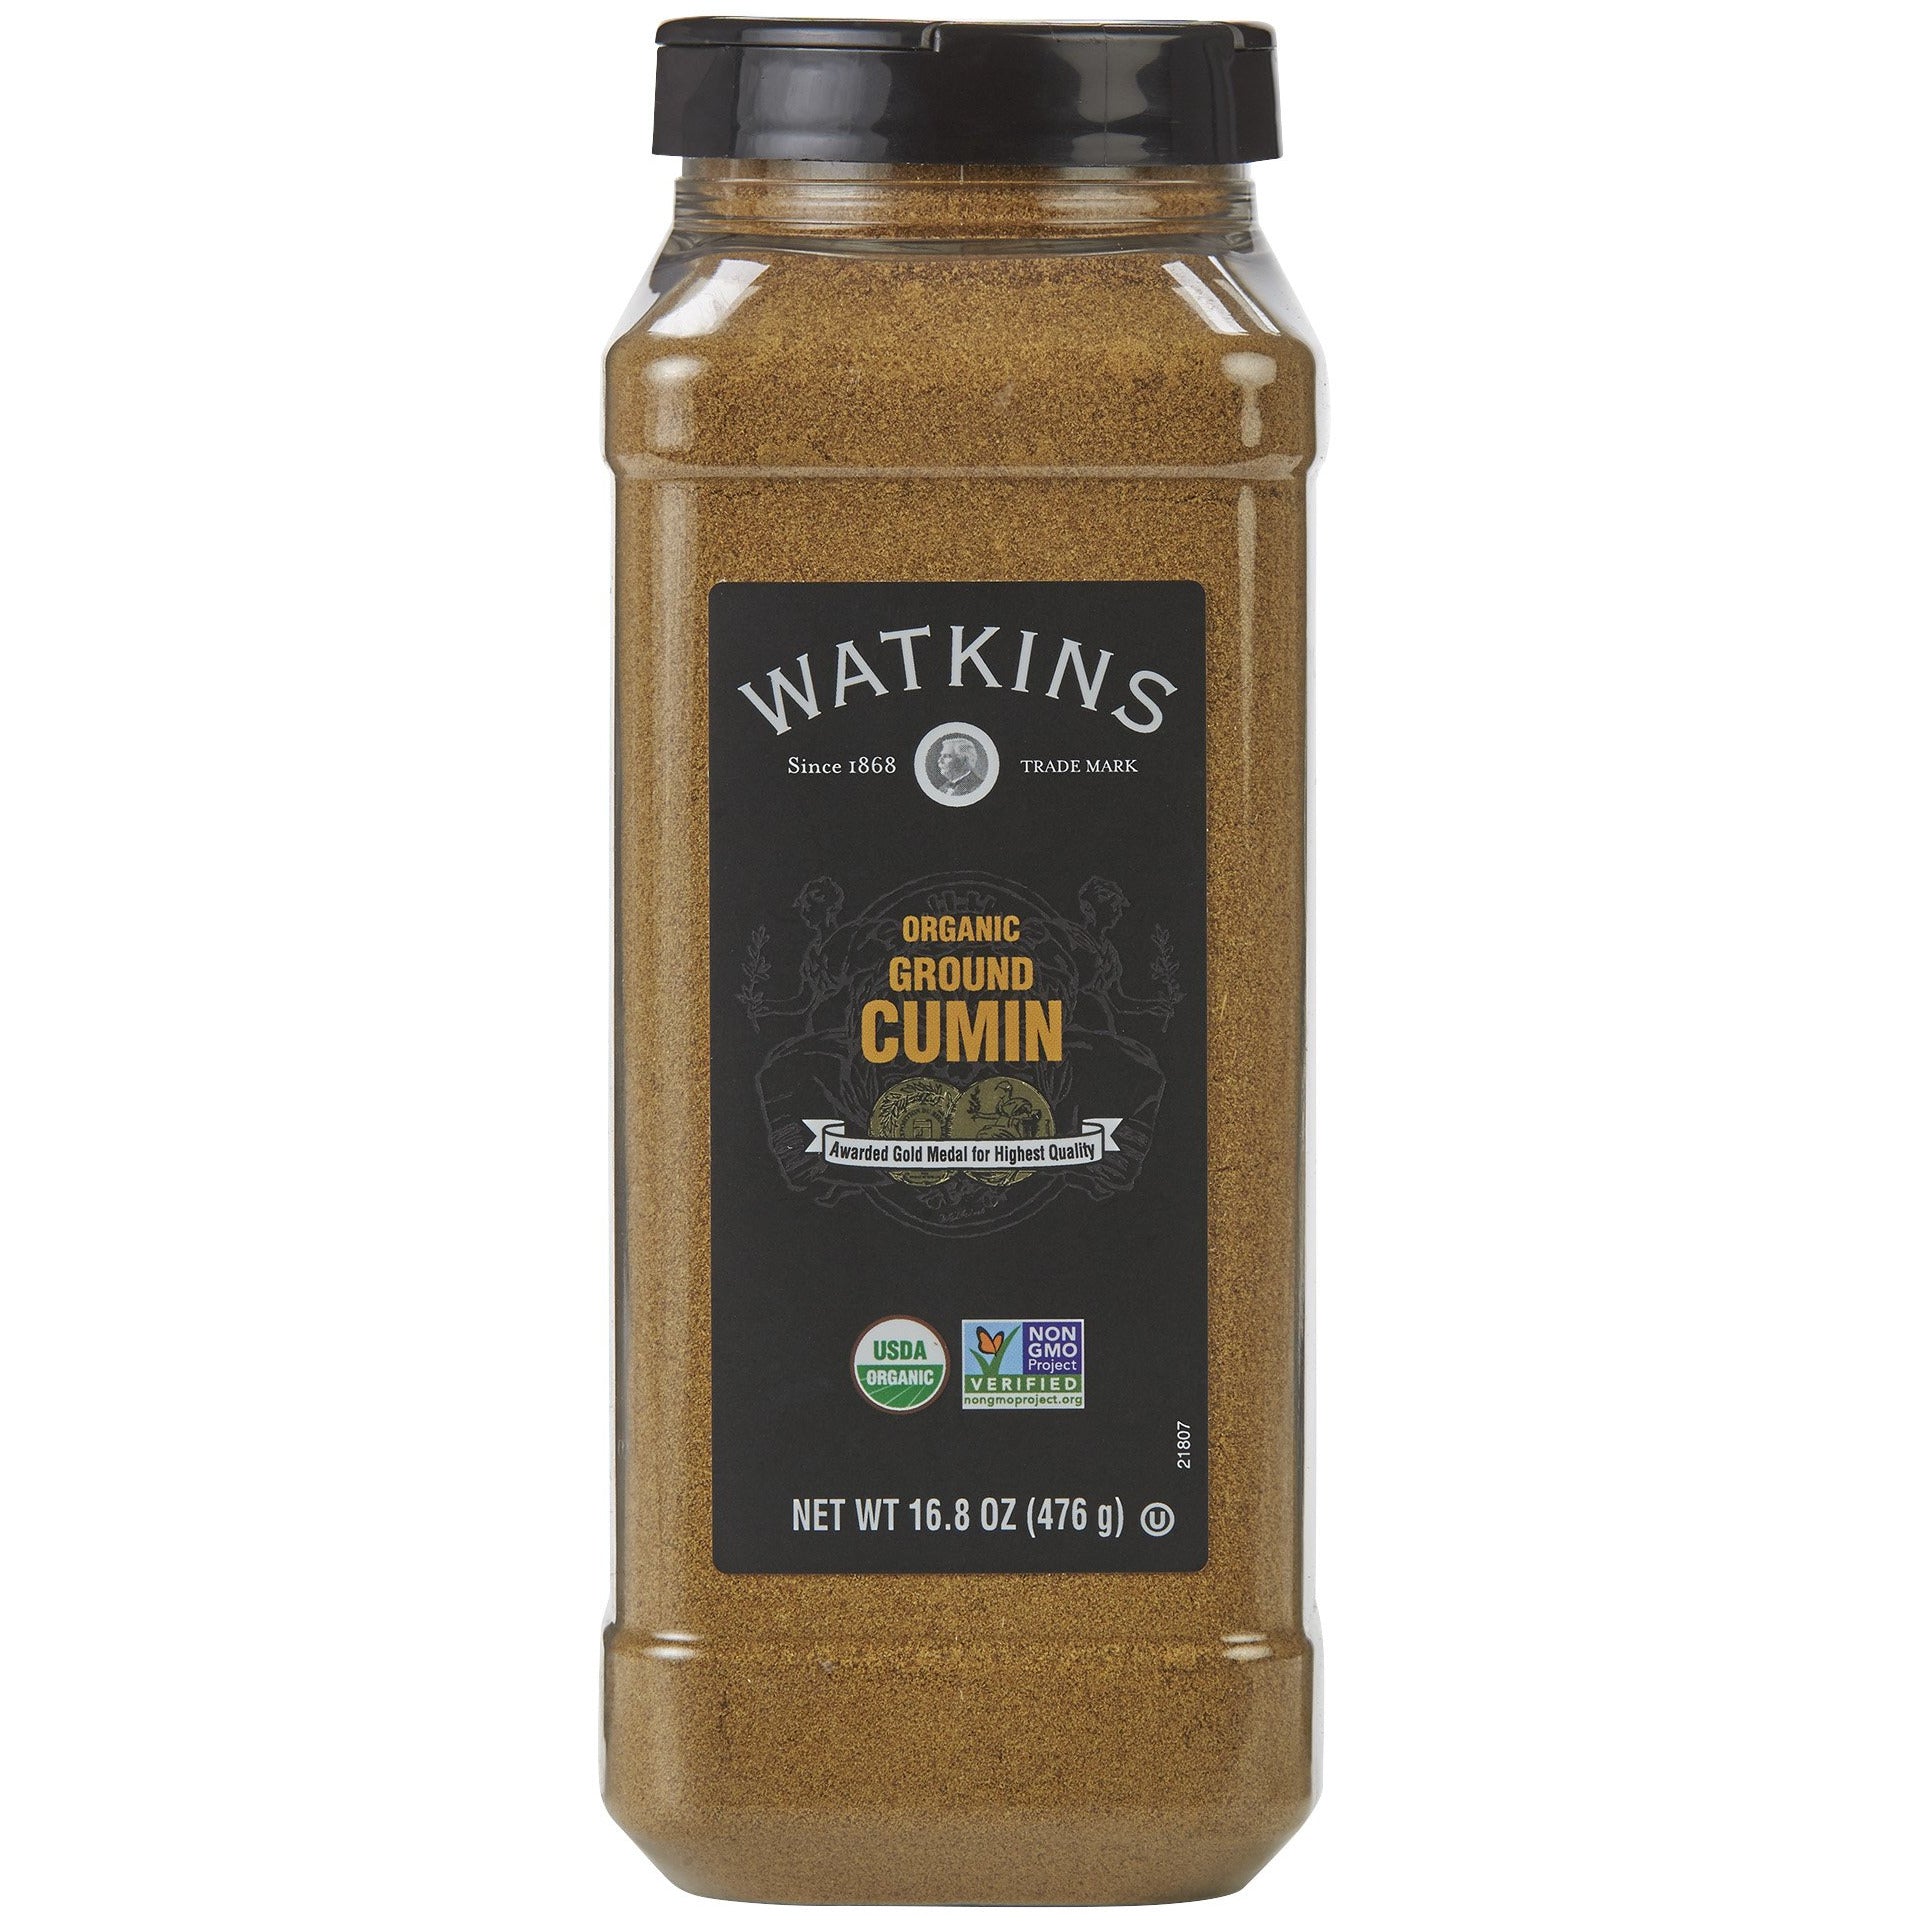 Watkins Gourmet Organic Spice Jar, Ground Cumin (16.8 oz)